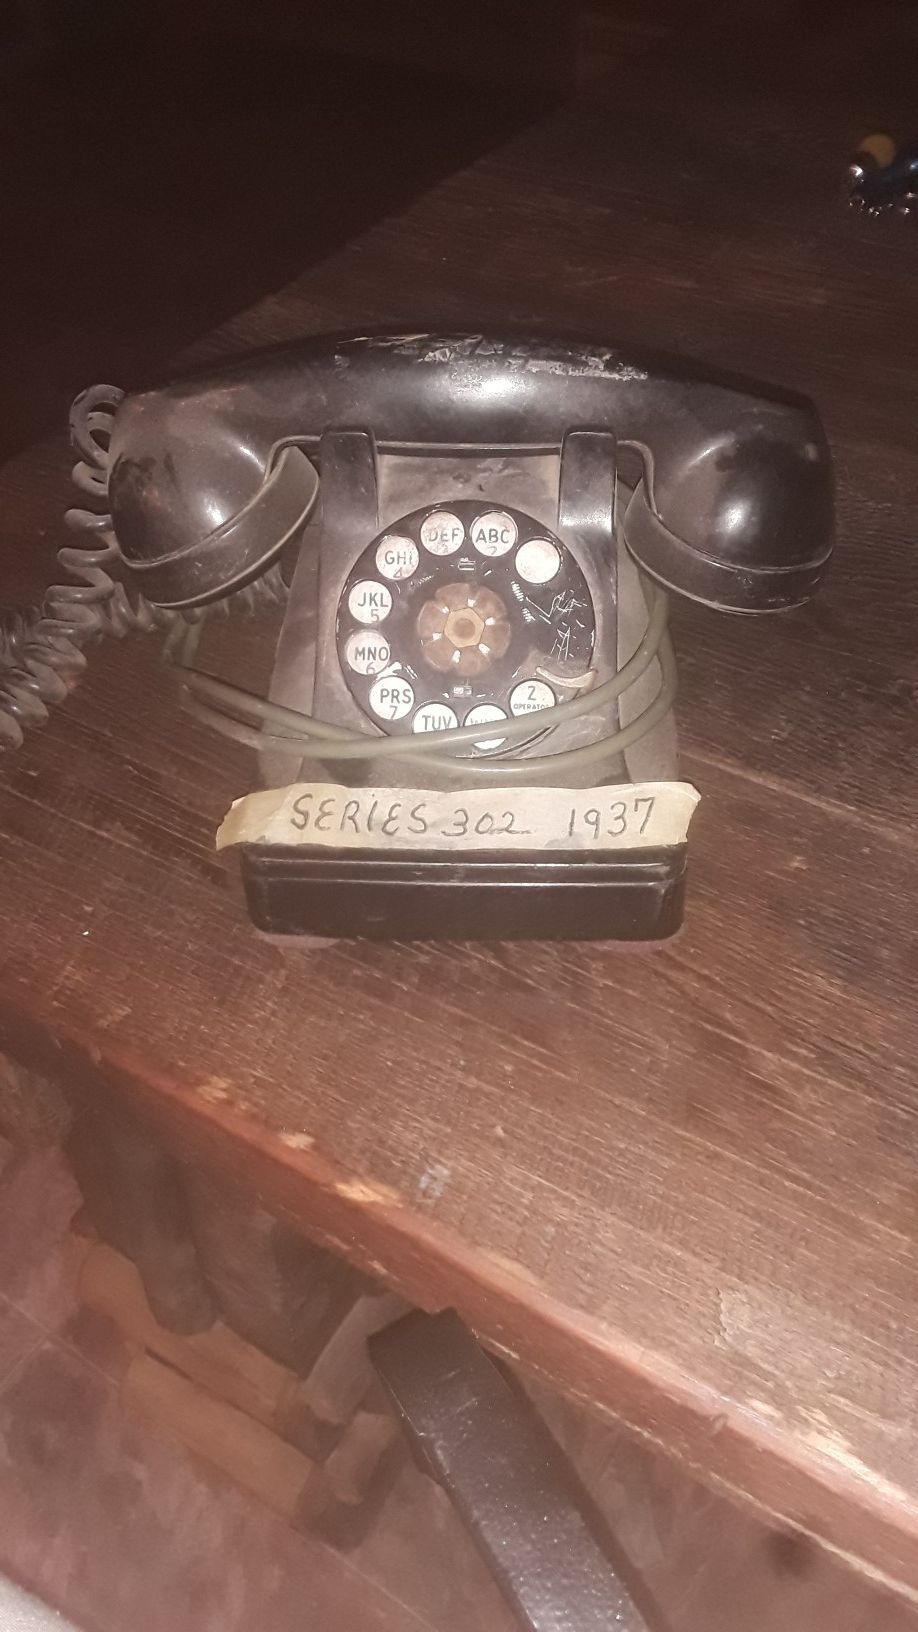 Series 302 1937 telephone